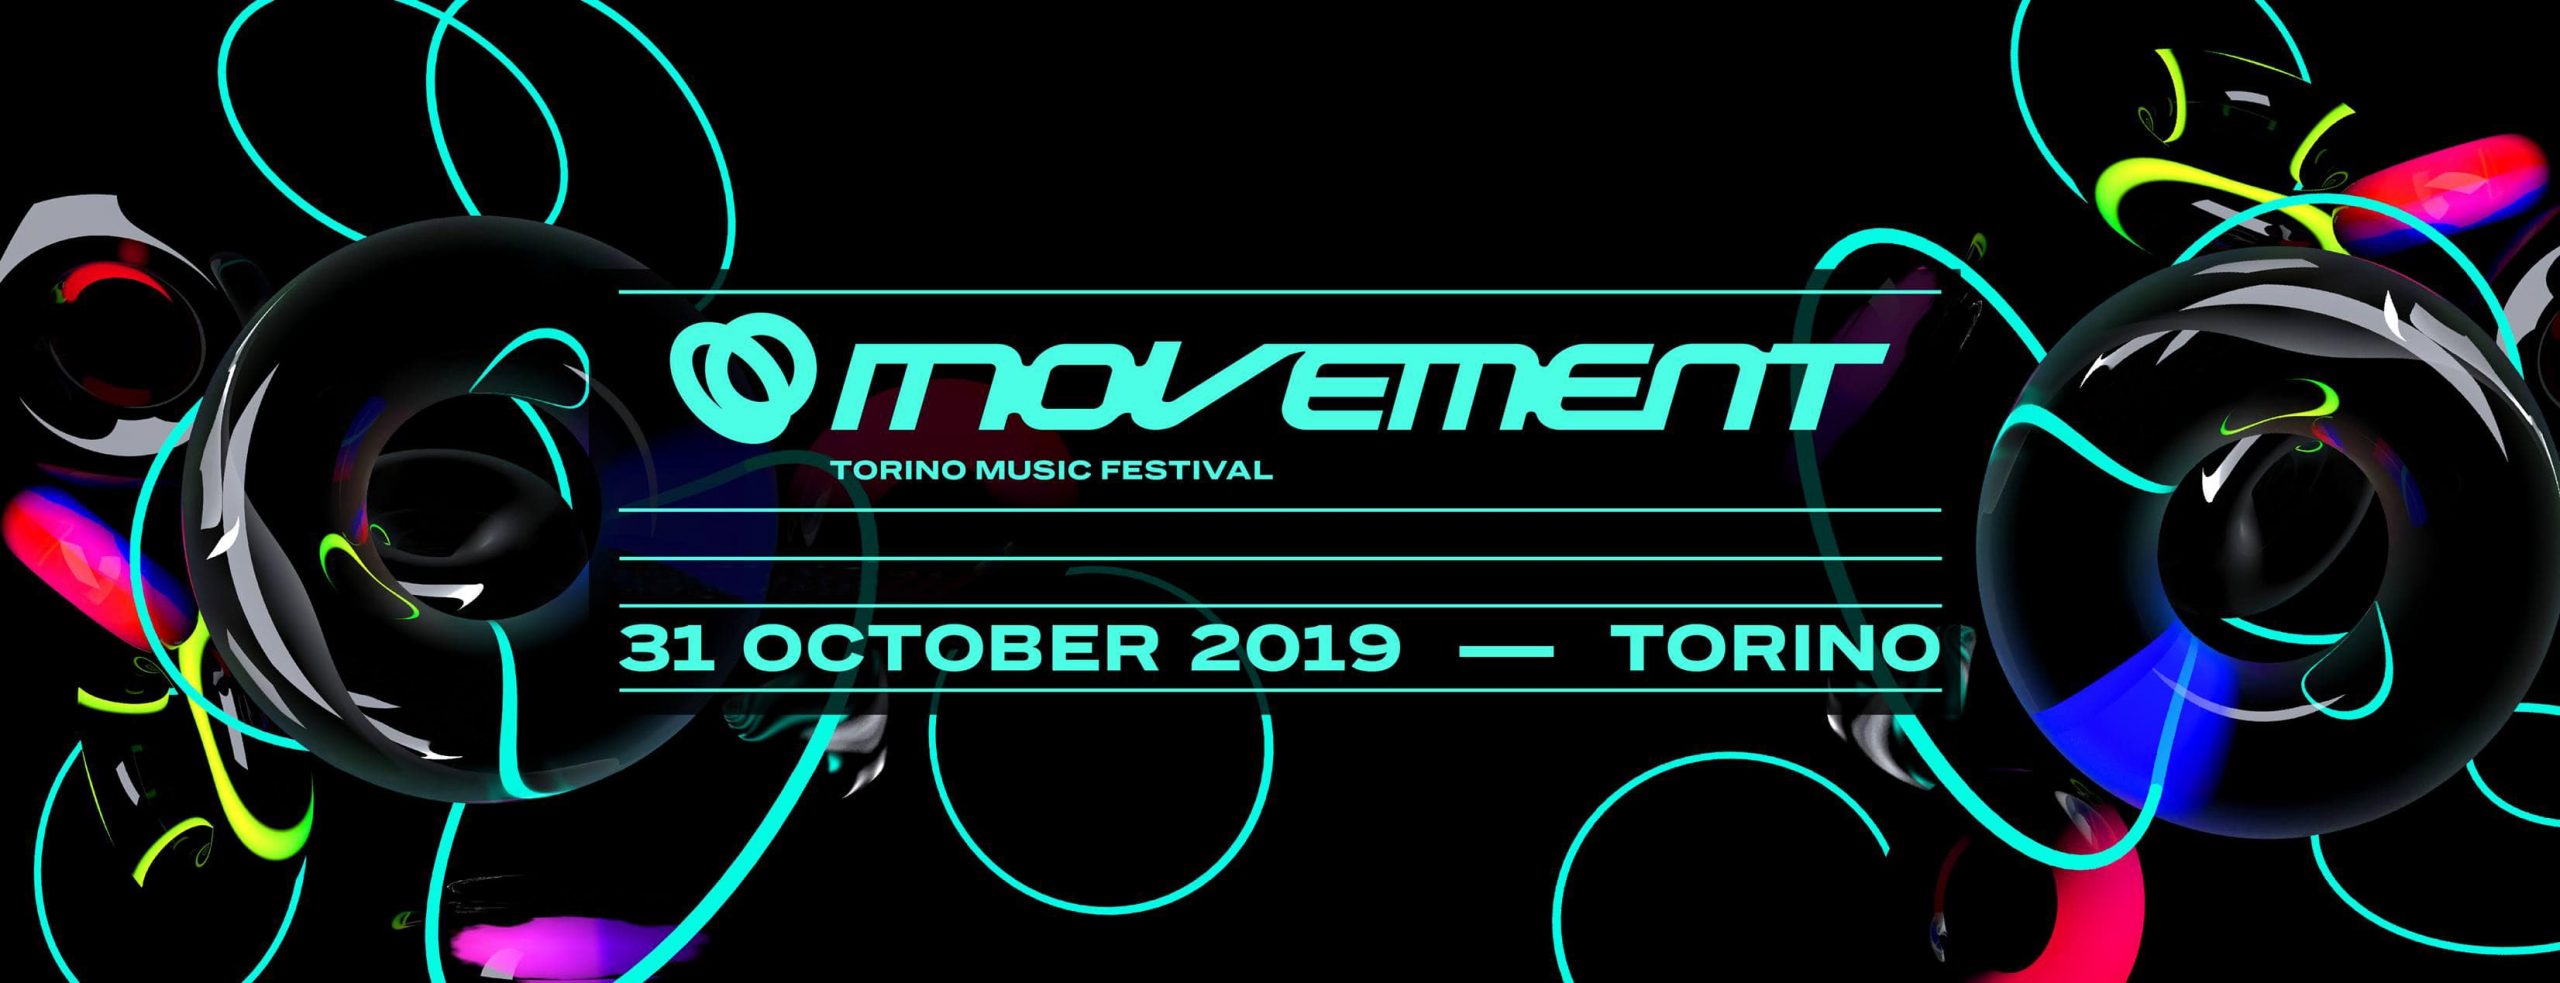 Movement-torino-music-festival-2019-